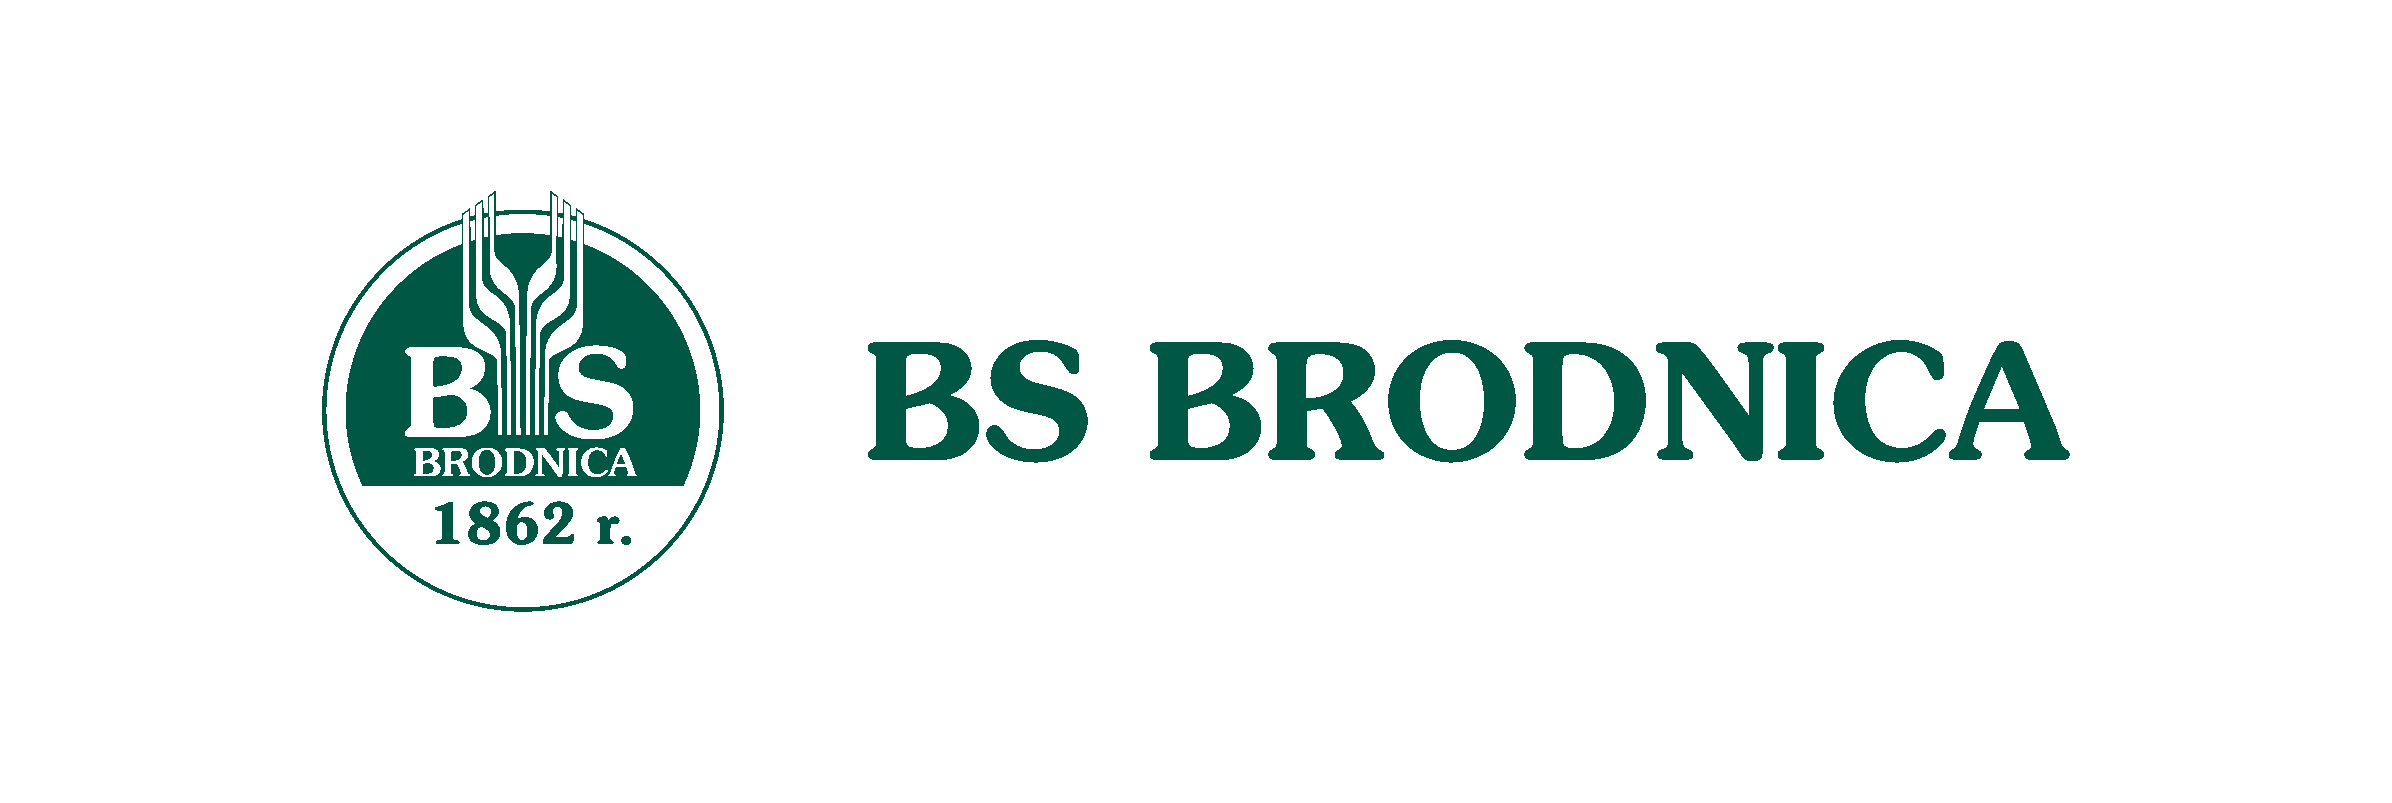 BS Brodnica logo